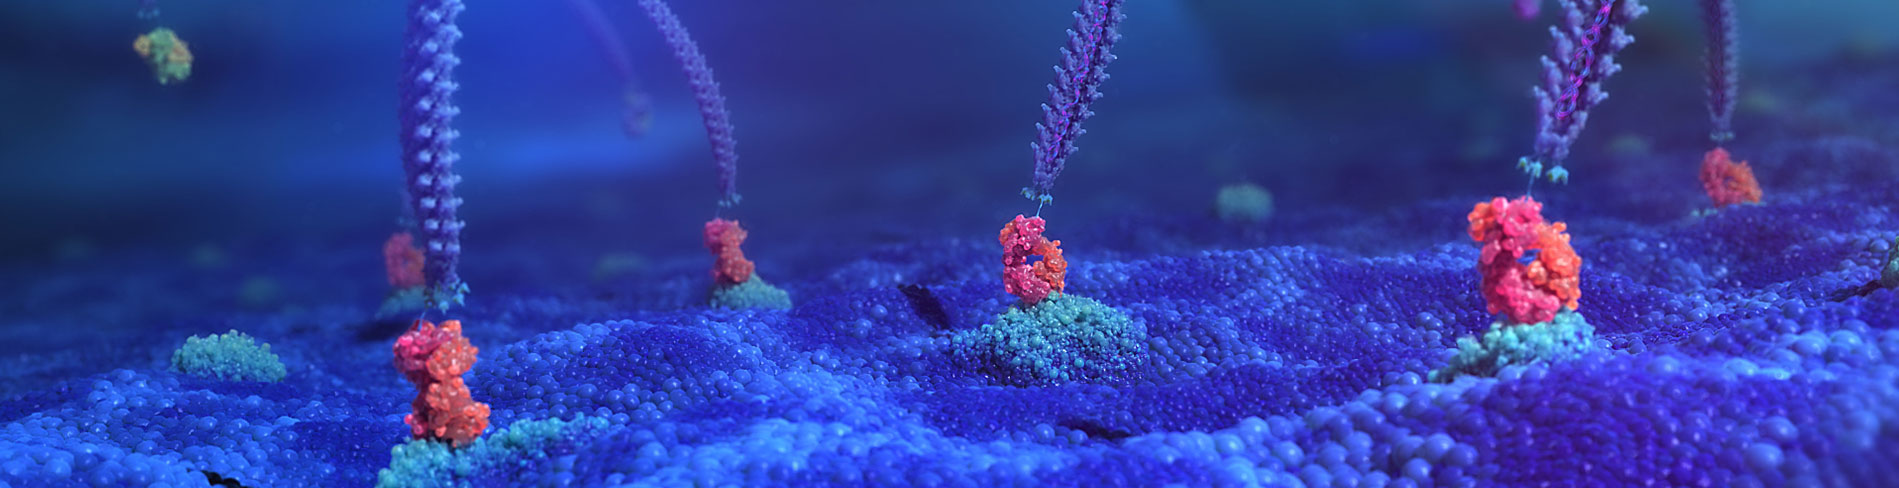 Phage-antibody bound to protein Hero Image